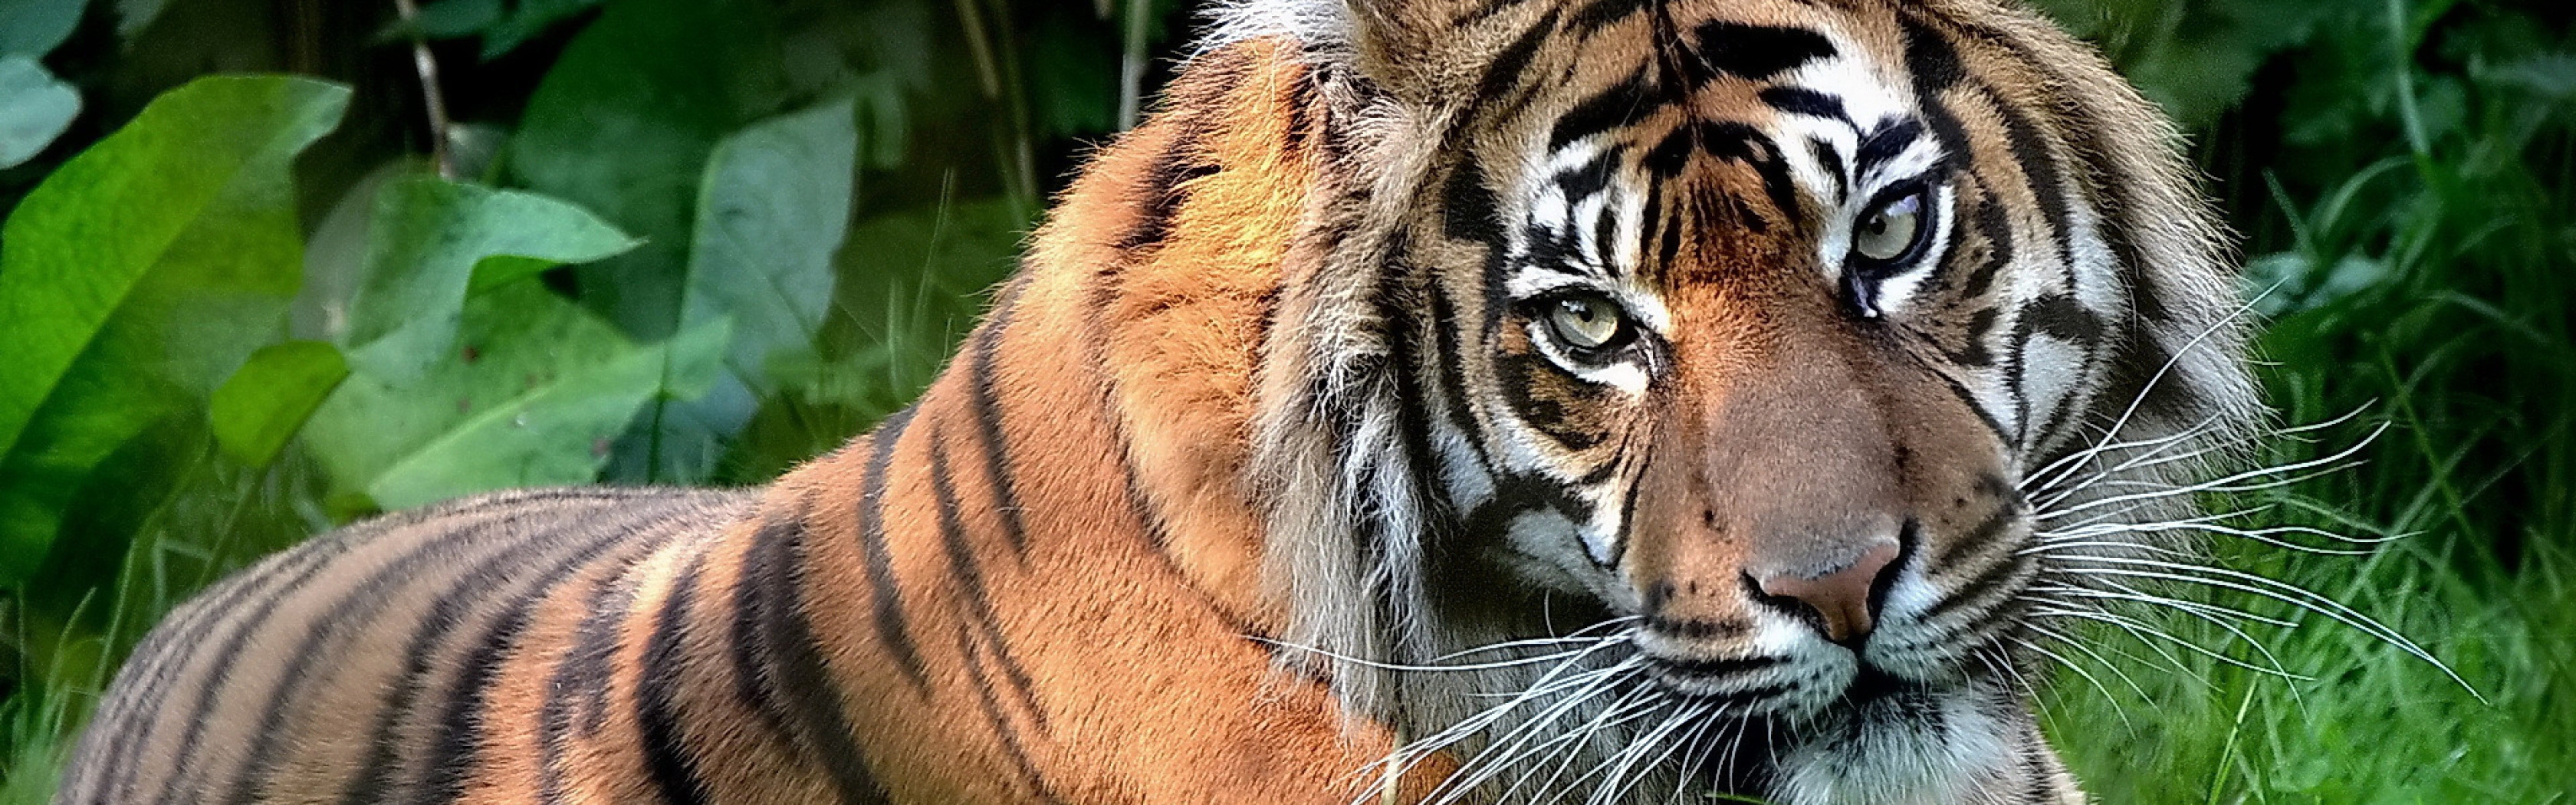 Тайгер на русском. Тигр в траве. Тигр в травке. Тигр 640x360. Тигр в траве рисунок.